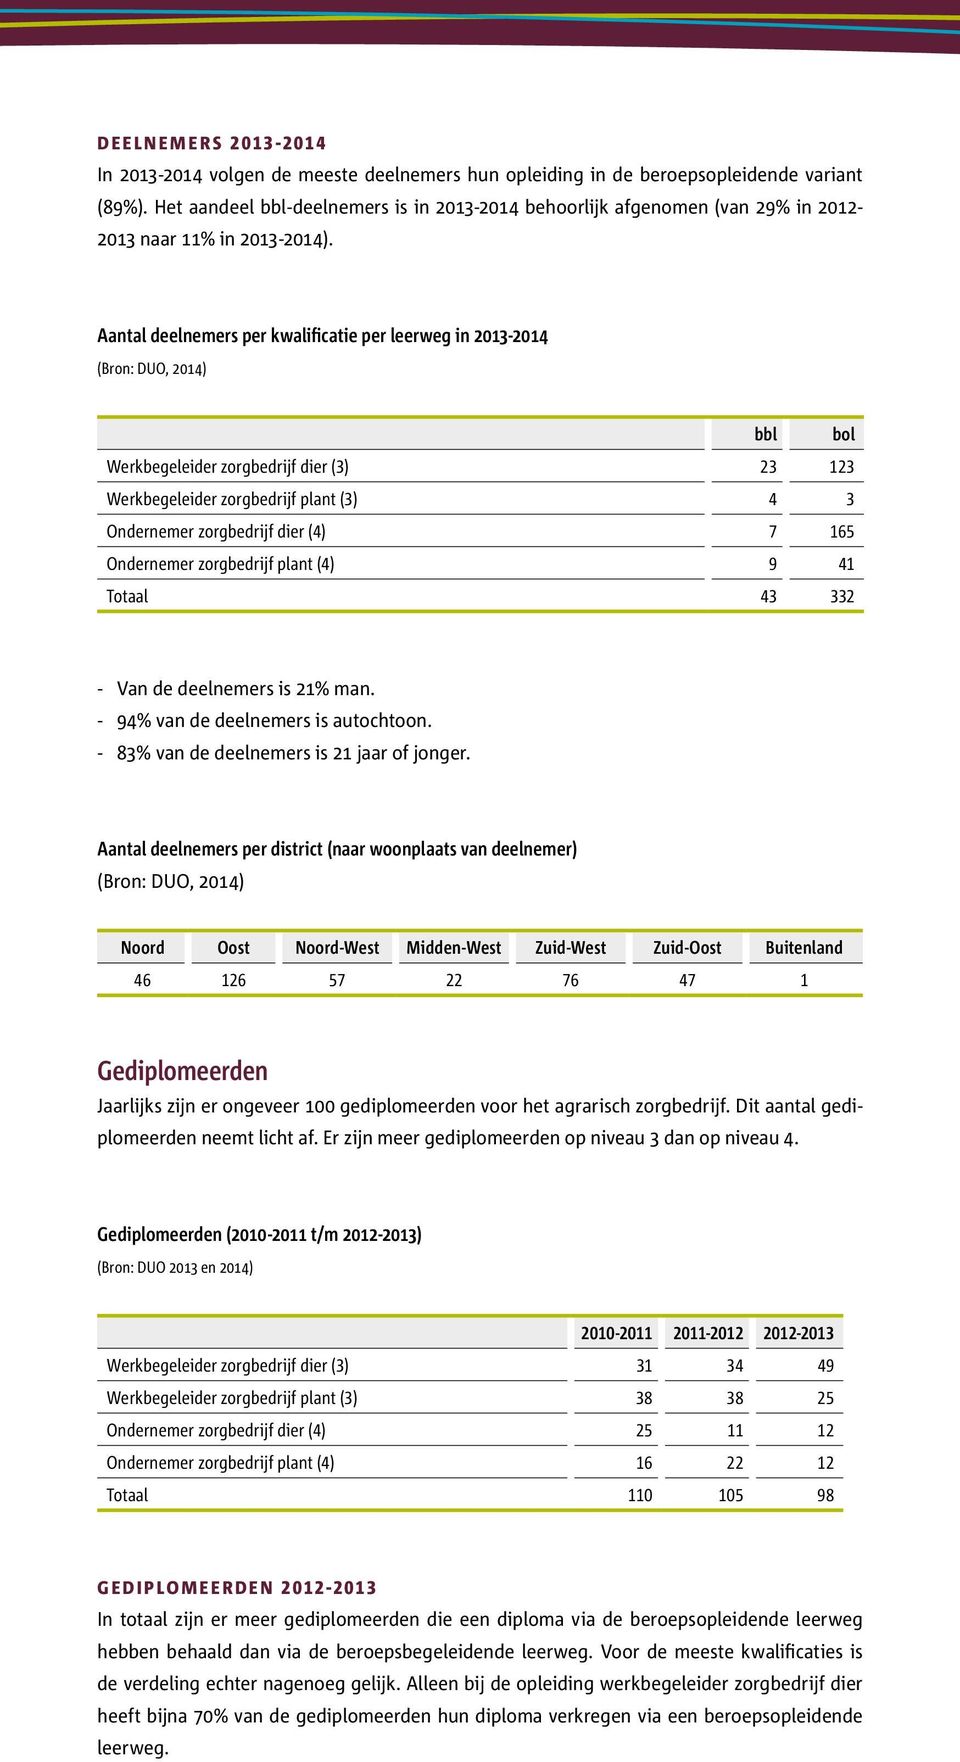 Aantal deelnemers per kwalificatie per leerweg in 2013-2014 bbl bol Werkbegeleider zorgbedrijf dier (3) 23 123 Werkbegeleider zorgbedrijf plant (3) 4 3 Ondernemer zorgbedrijf dier (4) 7 165